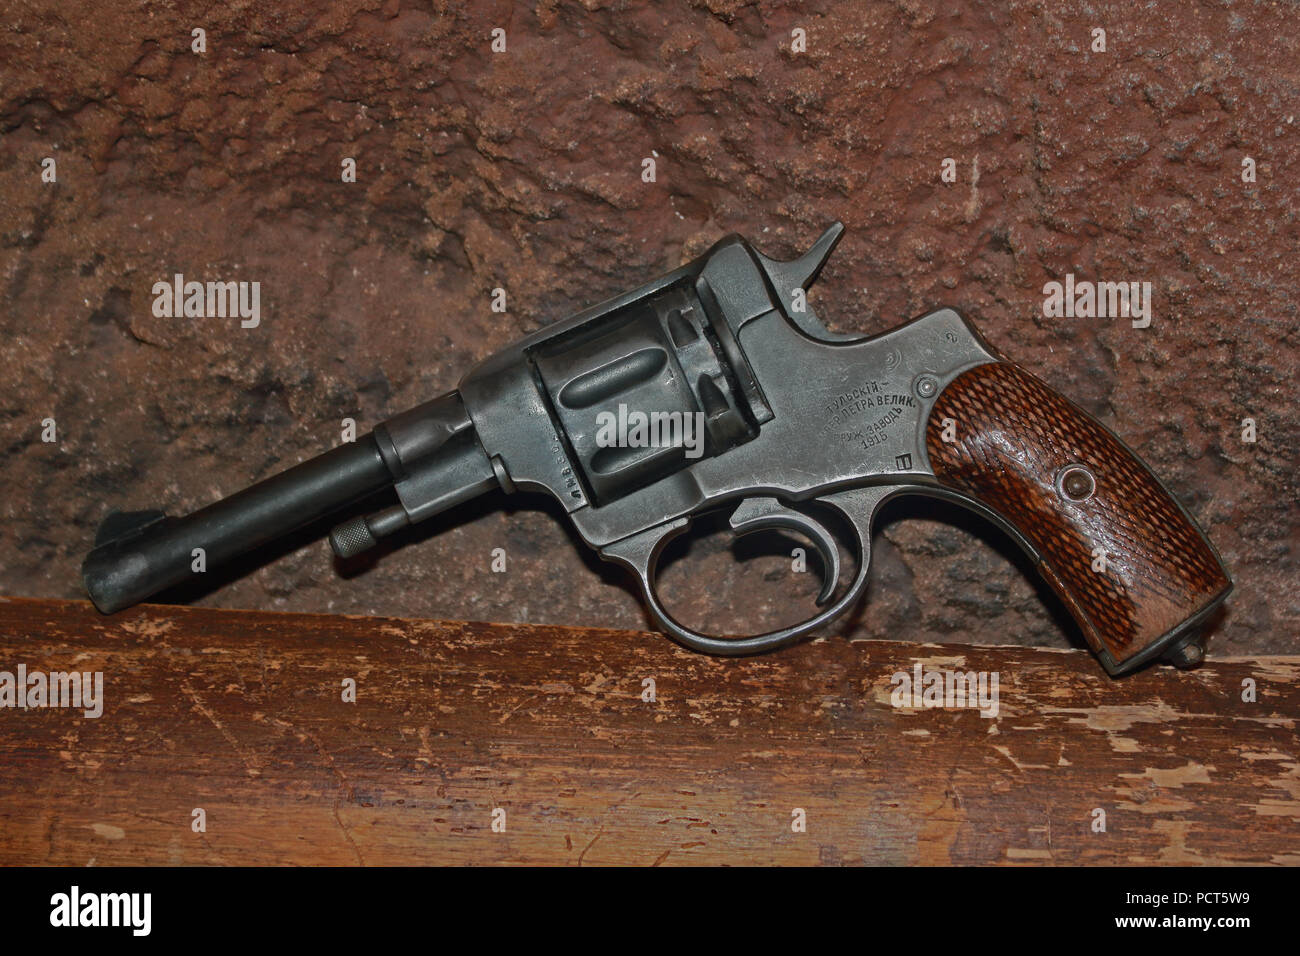 Vintage revolver on the coarse background photo Stock Photo